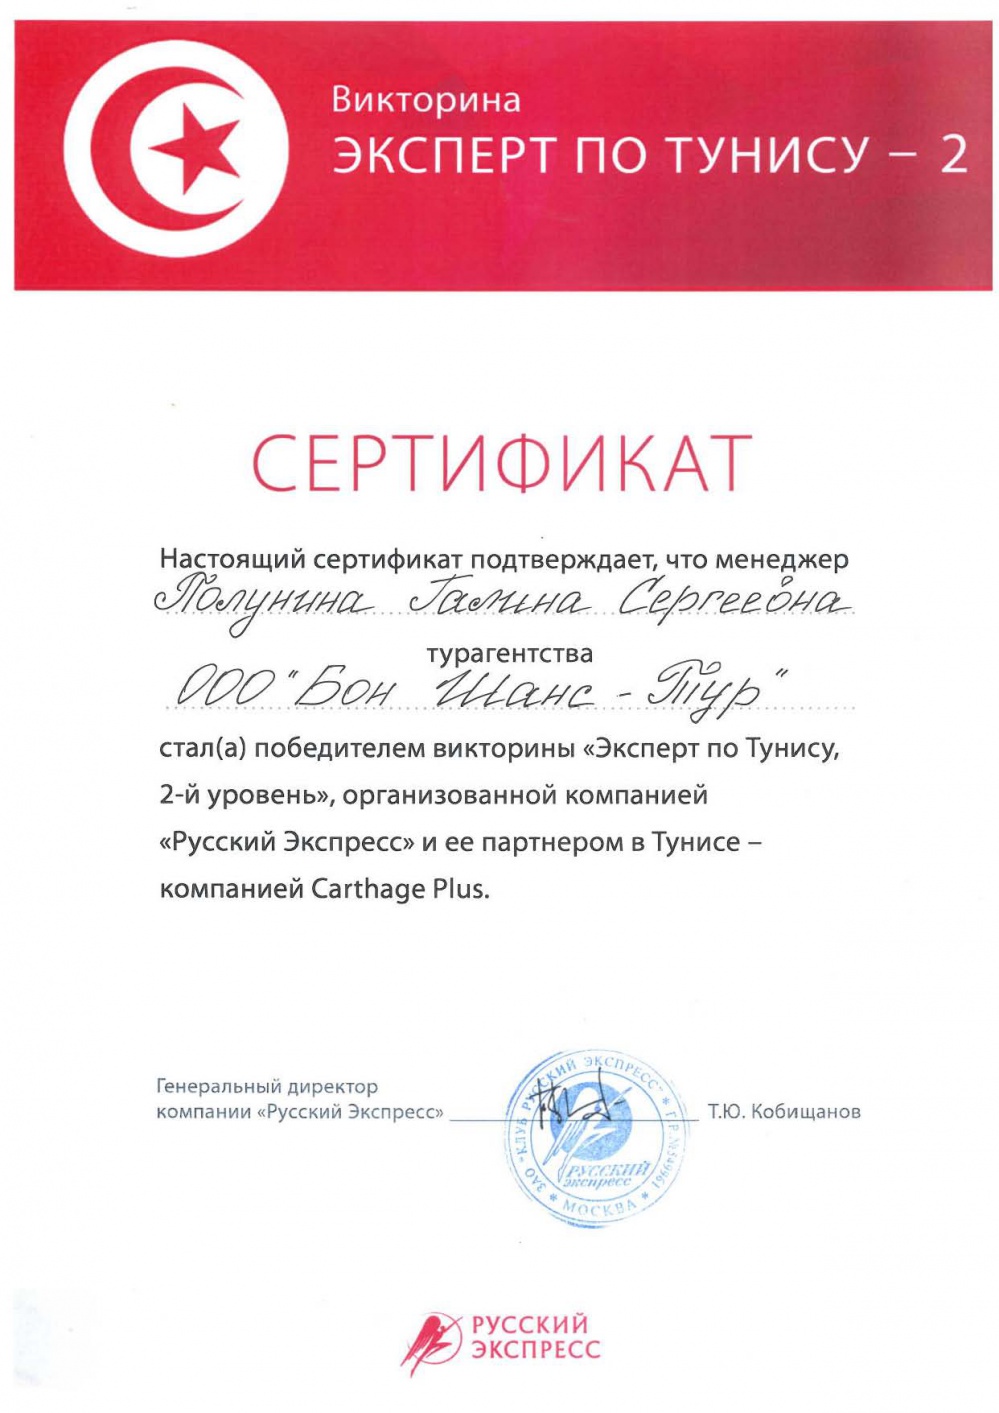 Сертификат - Эксперт по Тунису 2